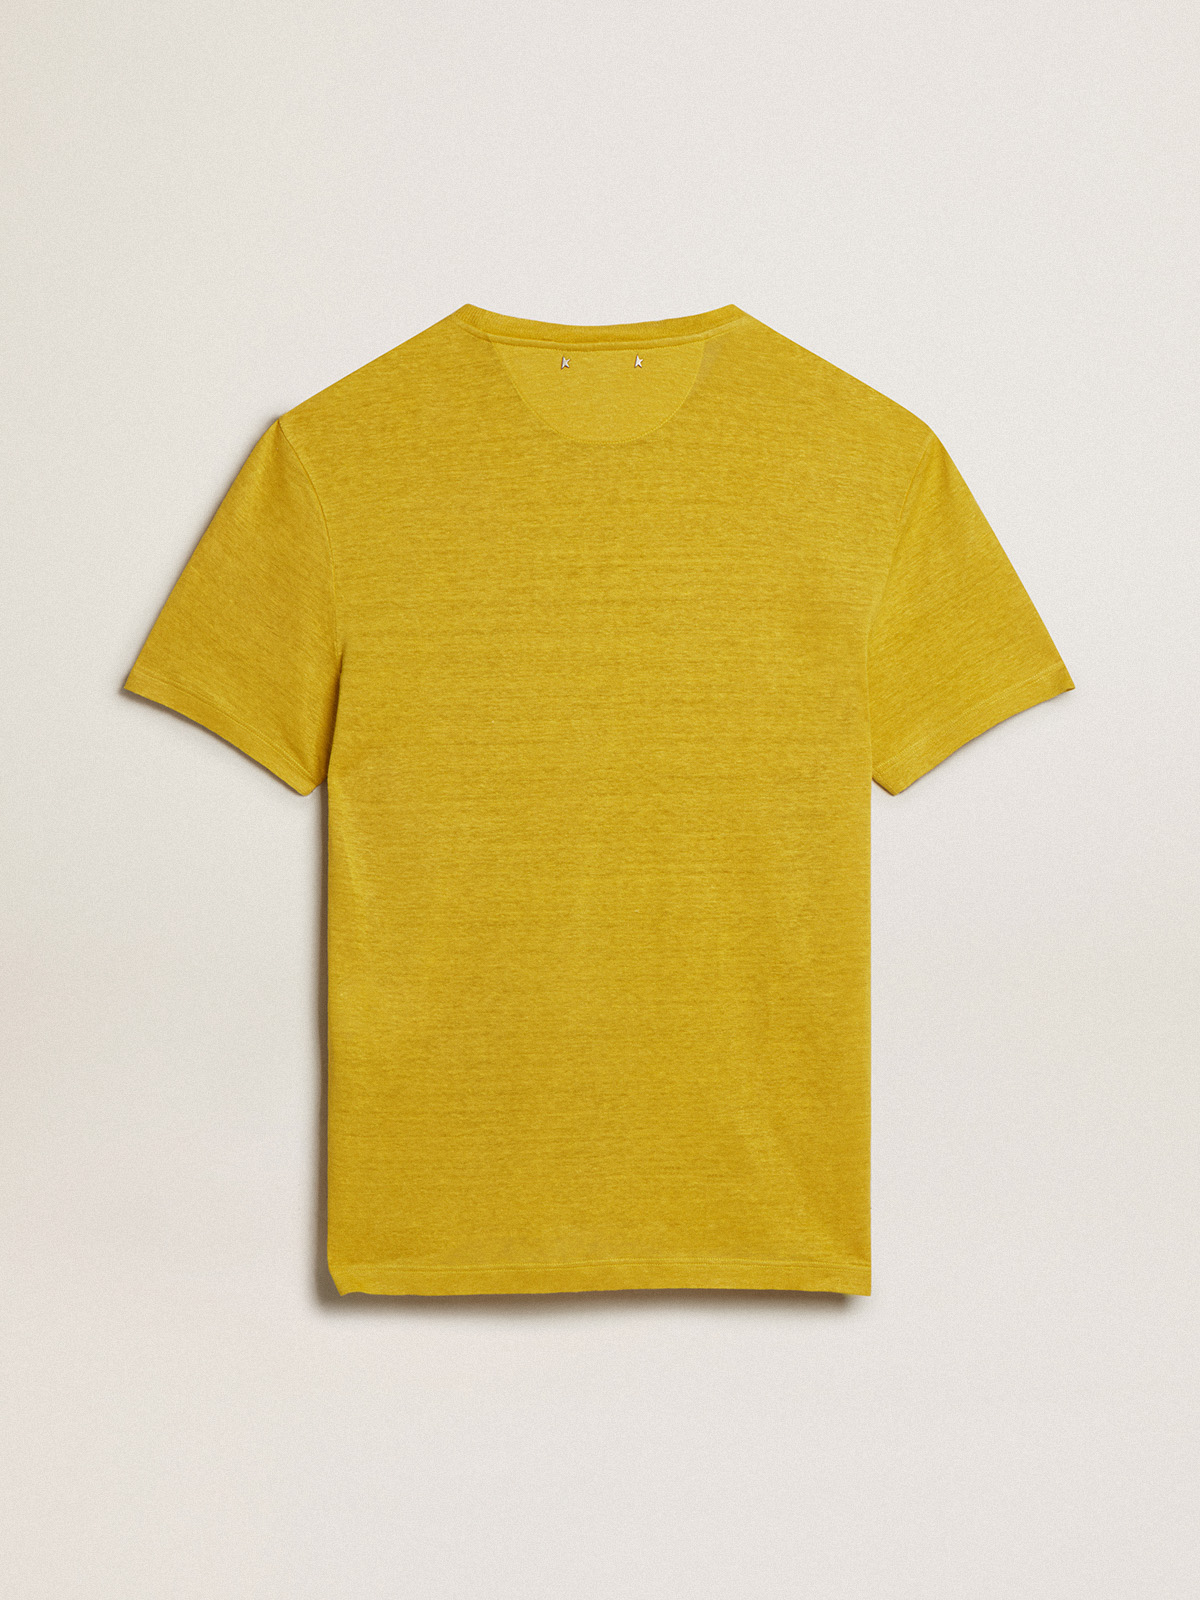 Goal Printed Round Neck Mustard Kid's T-Shirt